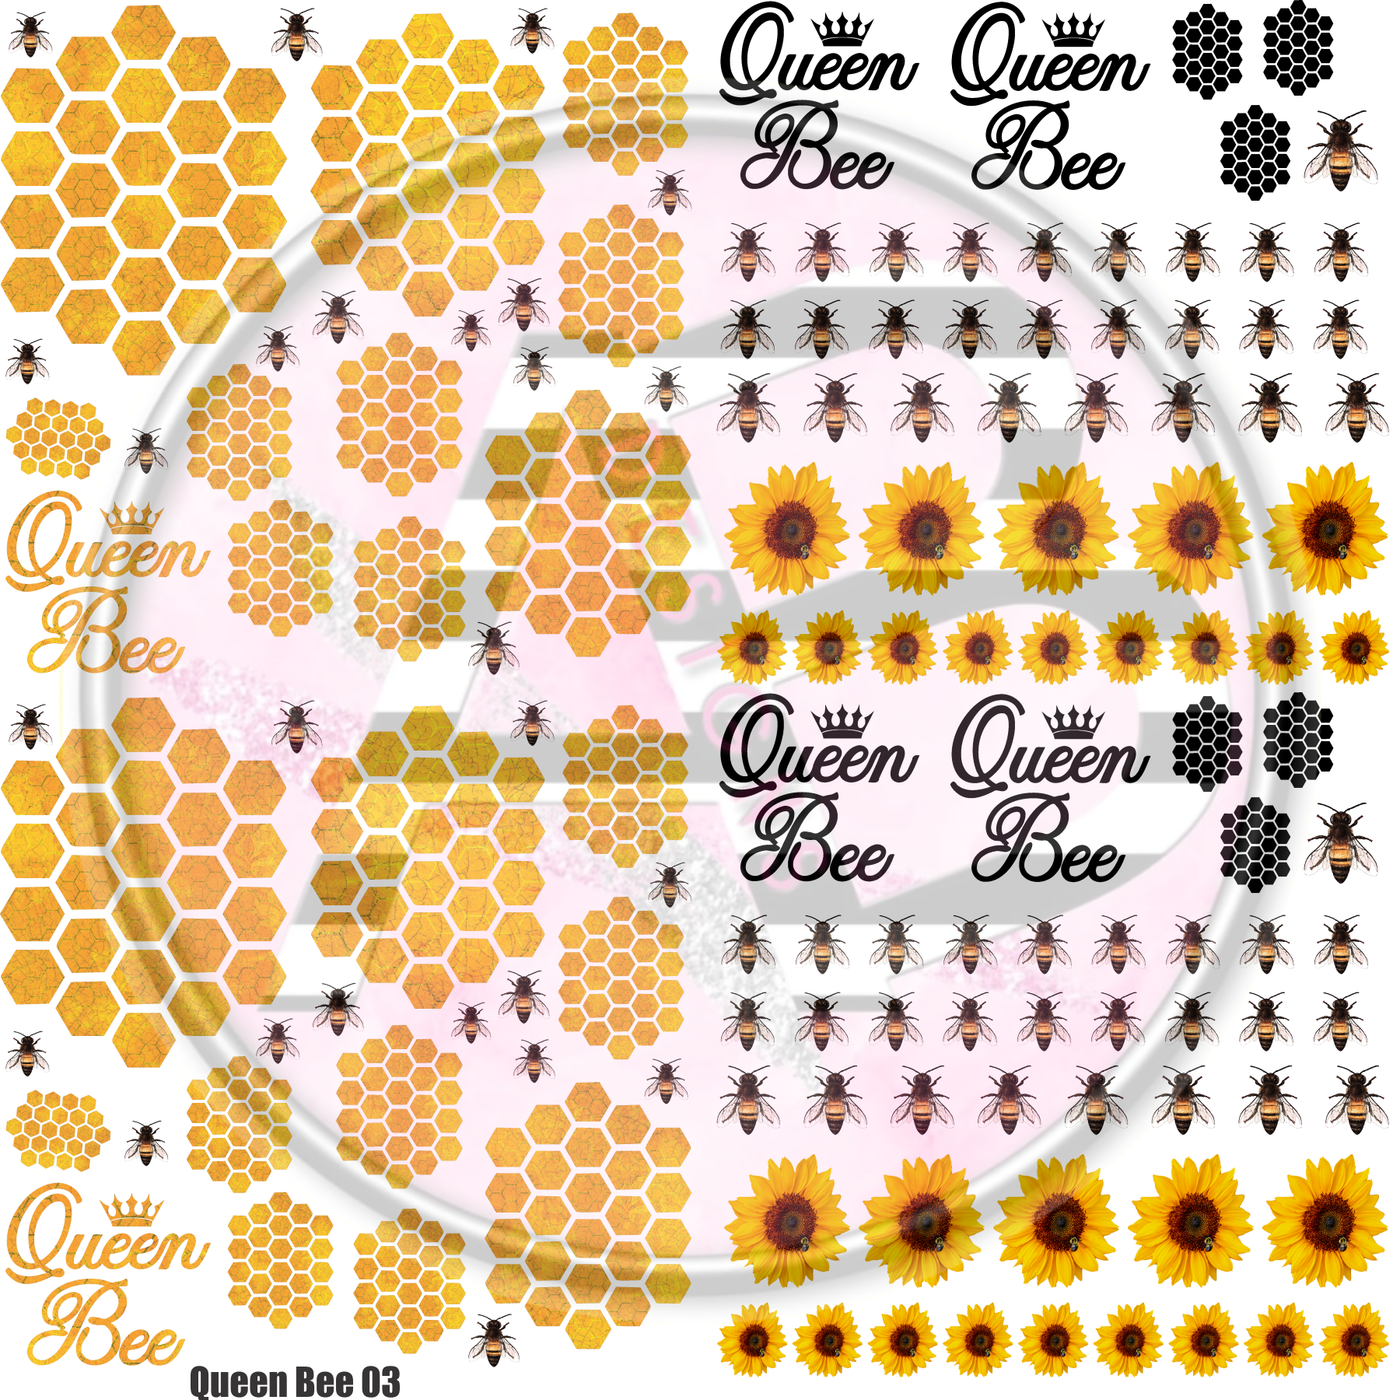 Queen Bee 03 Full Sheet 12x12 Clear Cast Decal